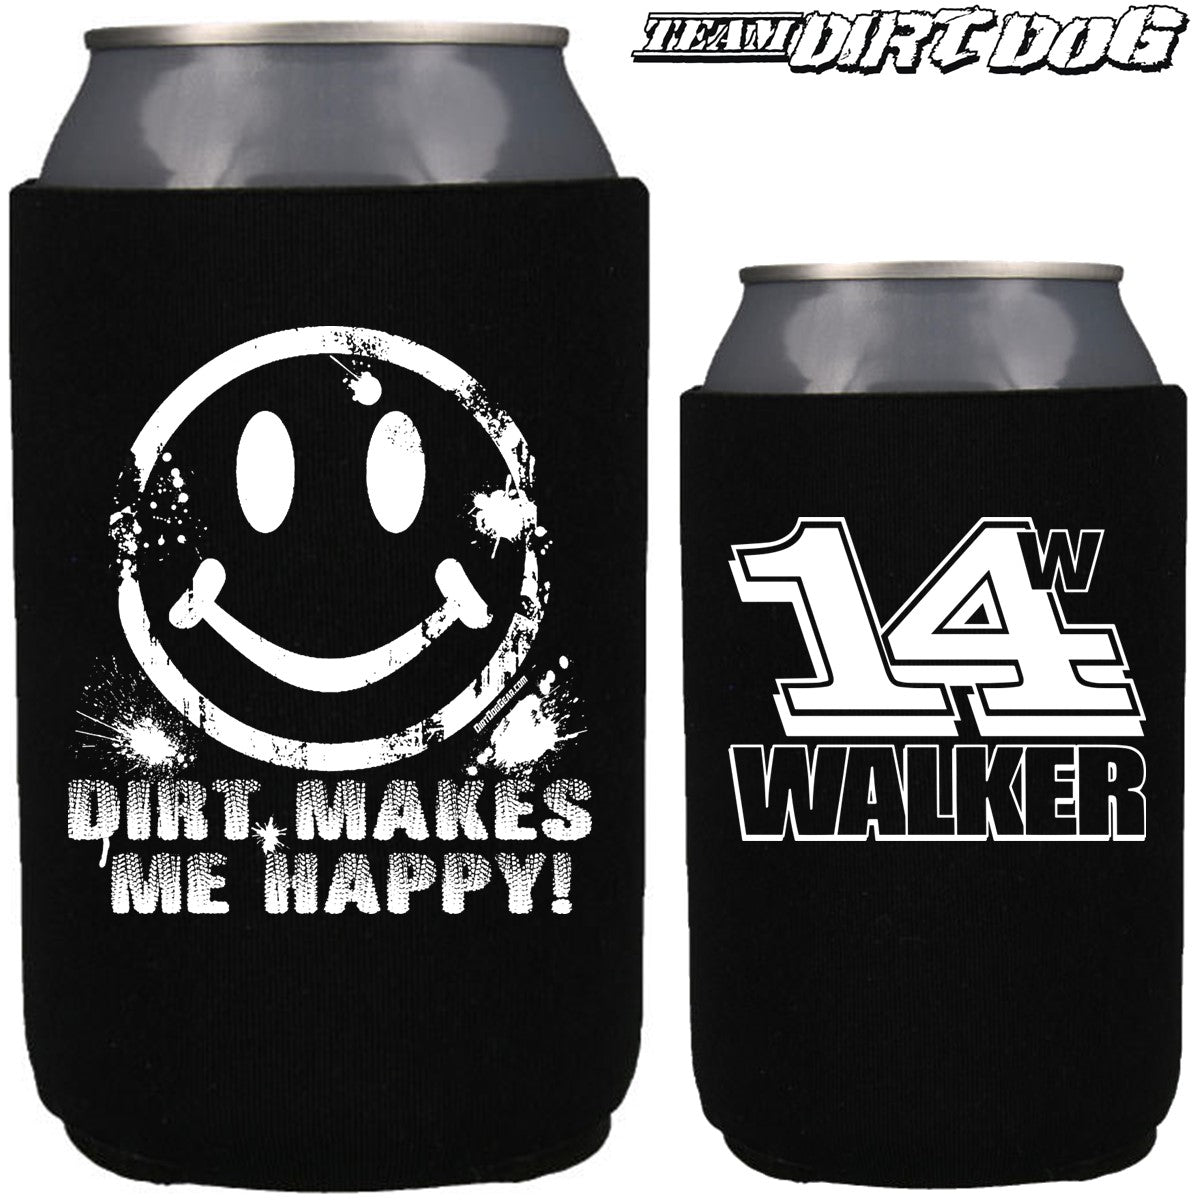 Walker 14w Beverage Coolers